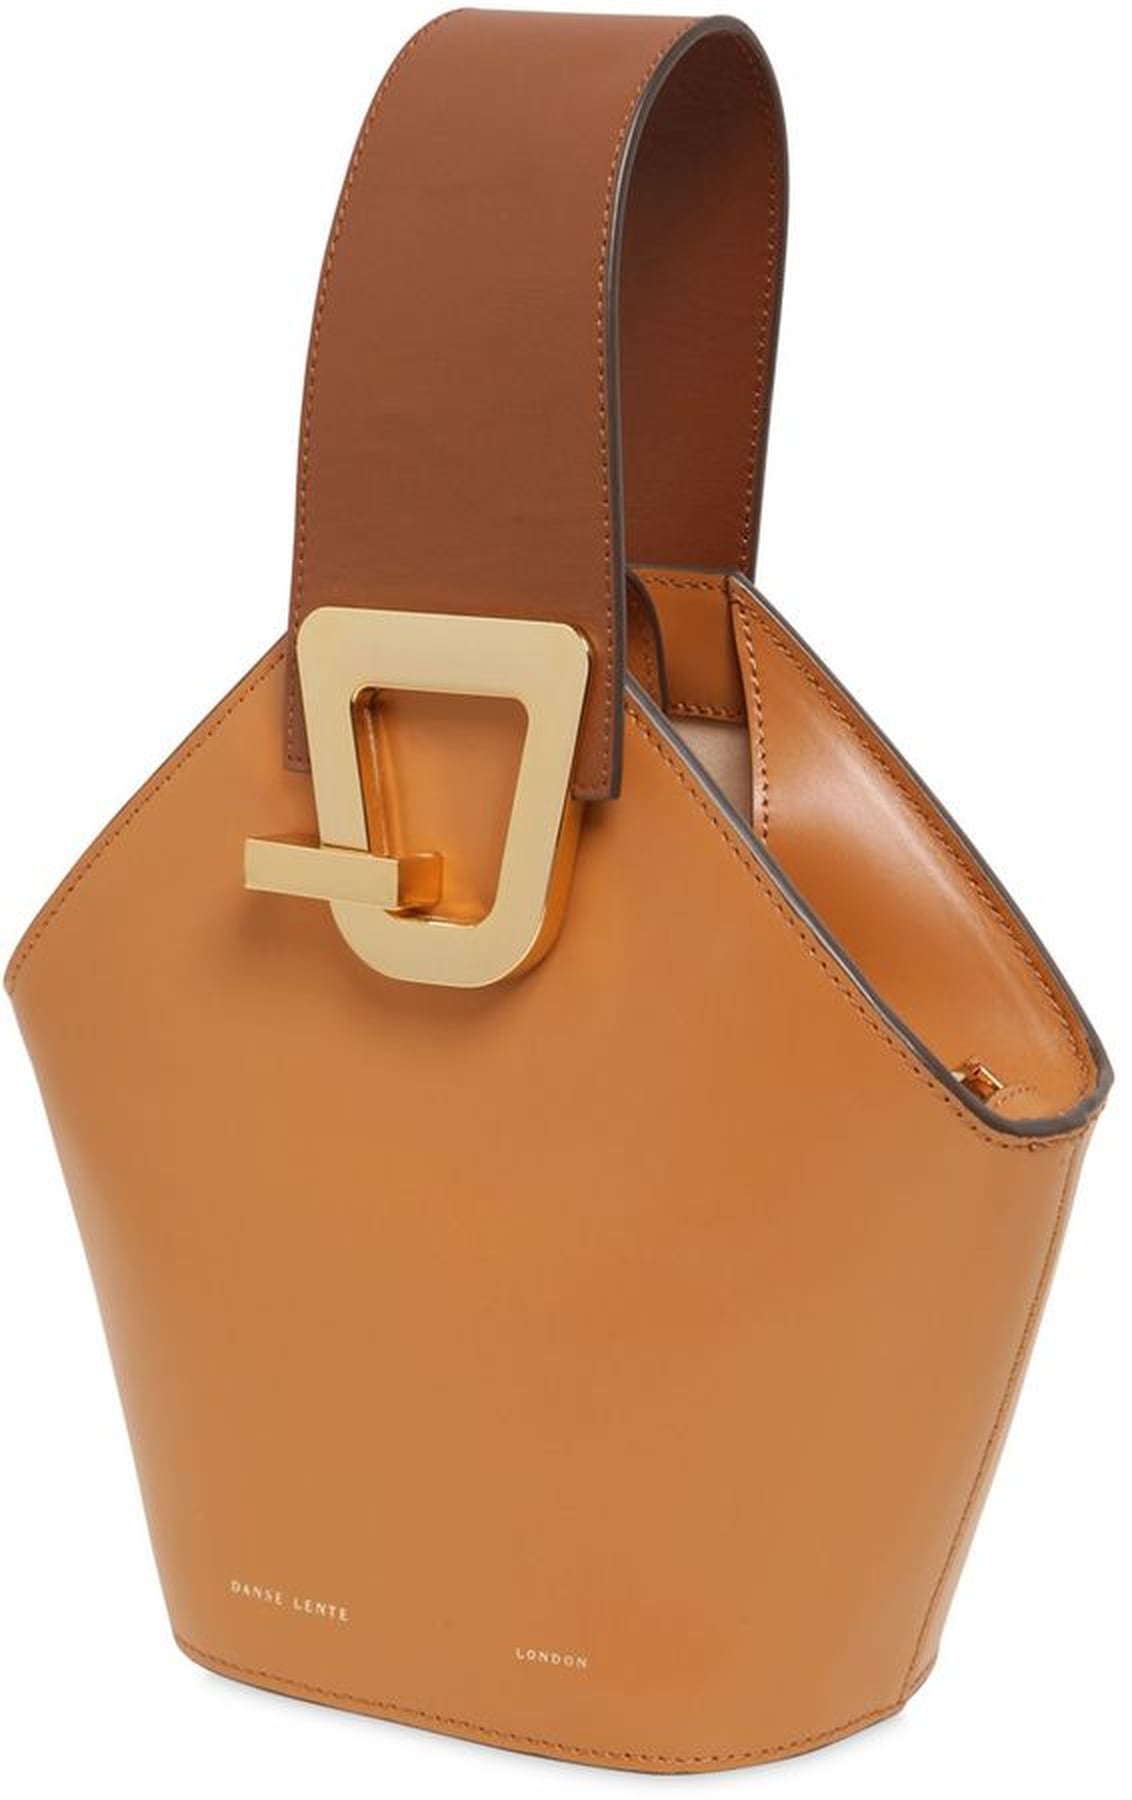 Kourtney Kardashian Mini Louis Vuitton Bag | POPSUGAR Fashion